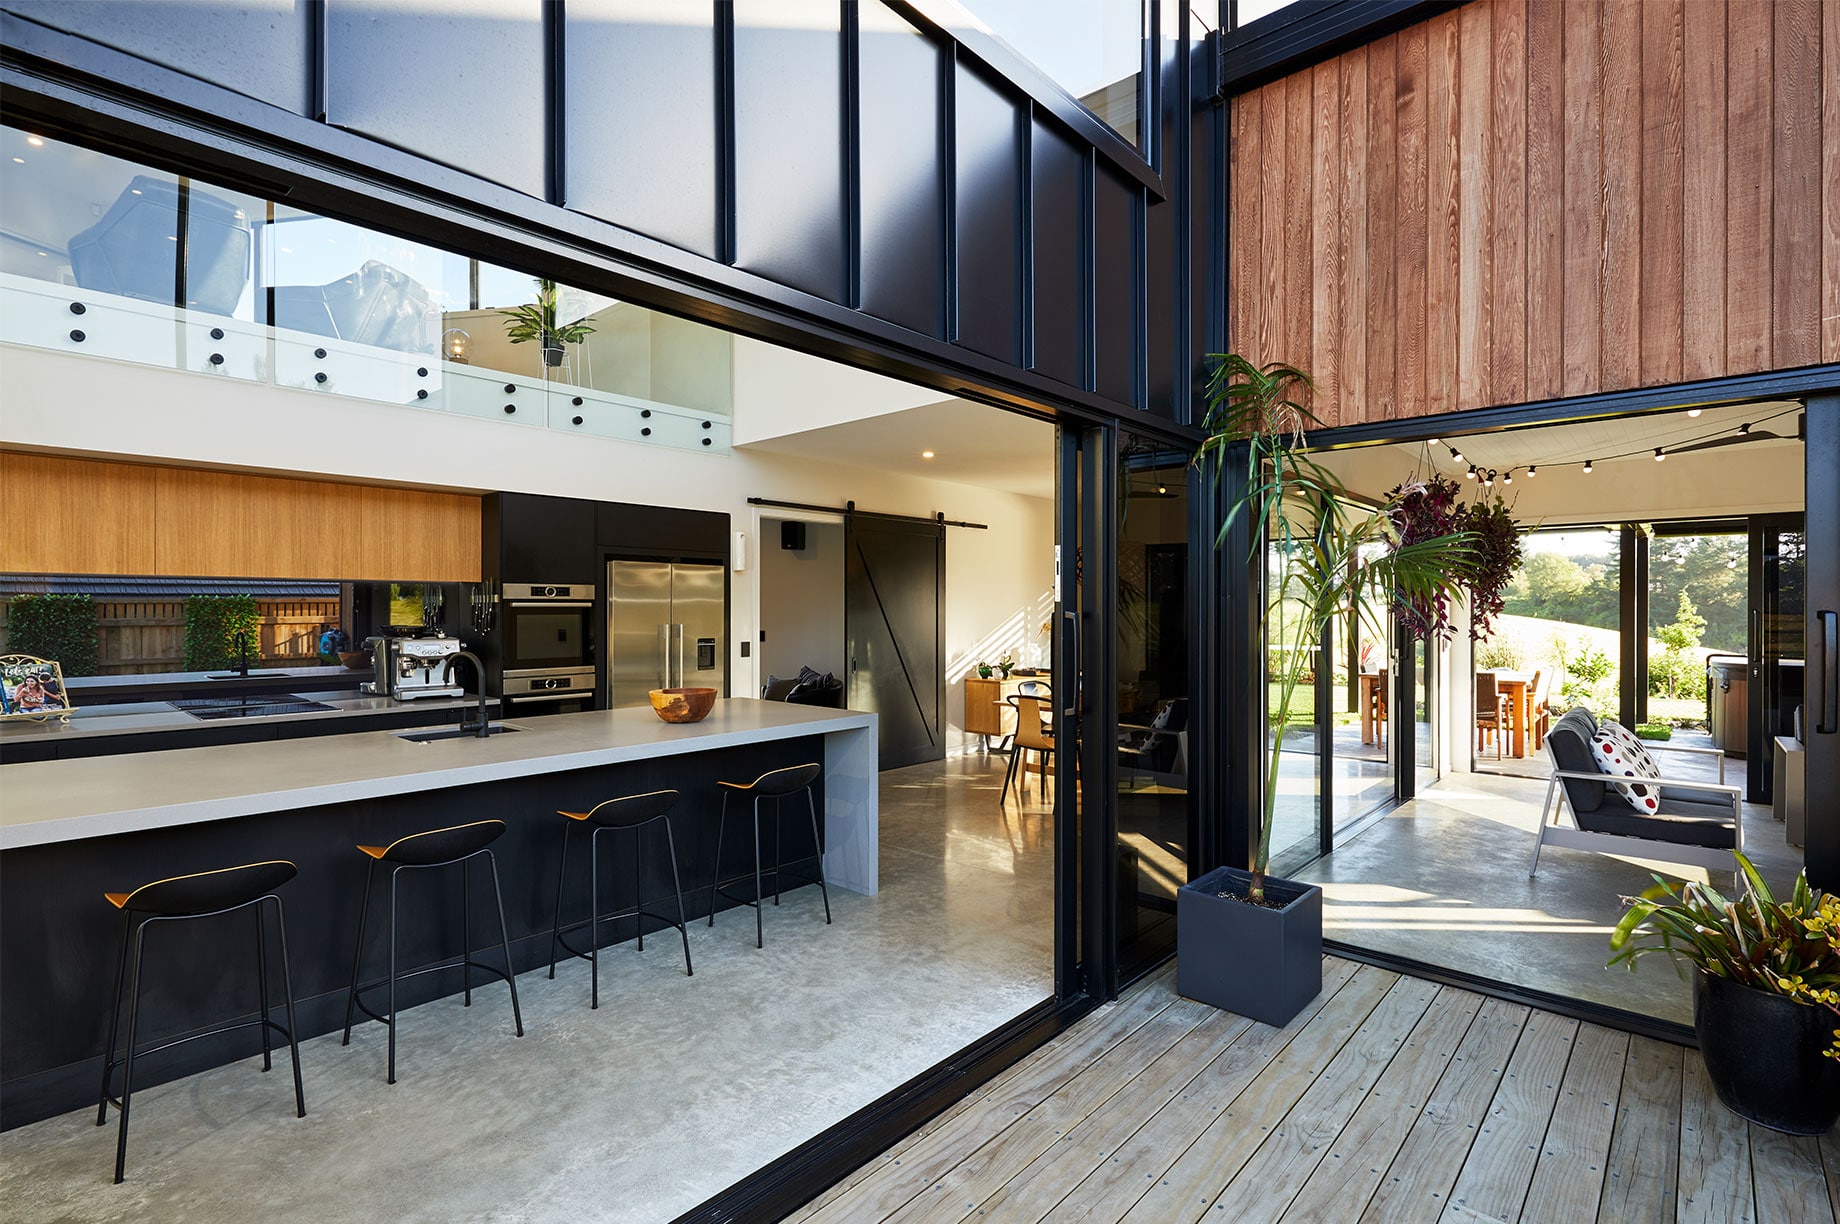 House with indoor outdoor living space flow